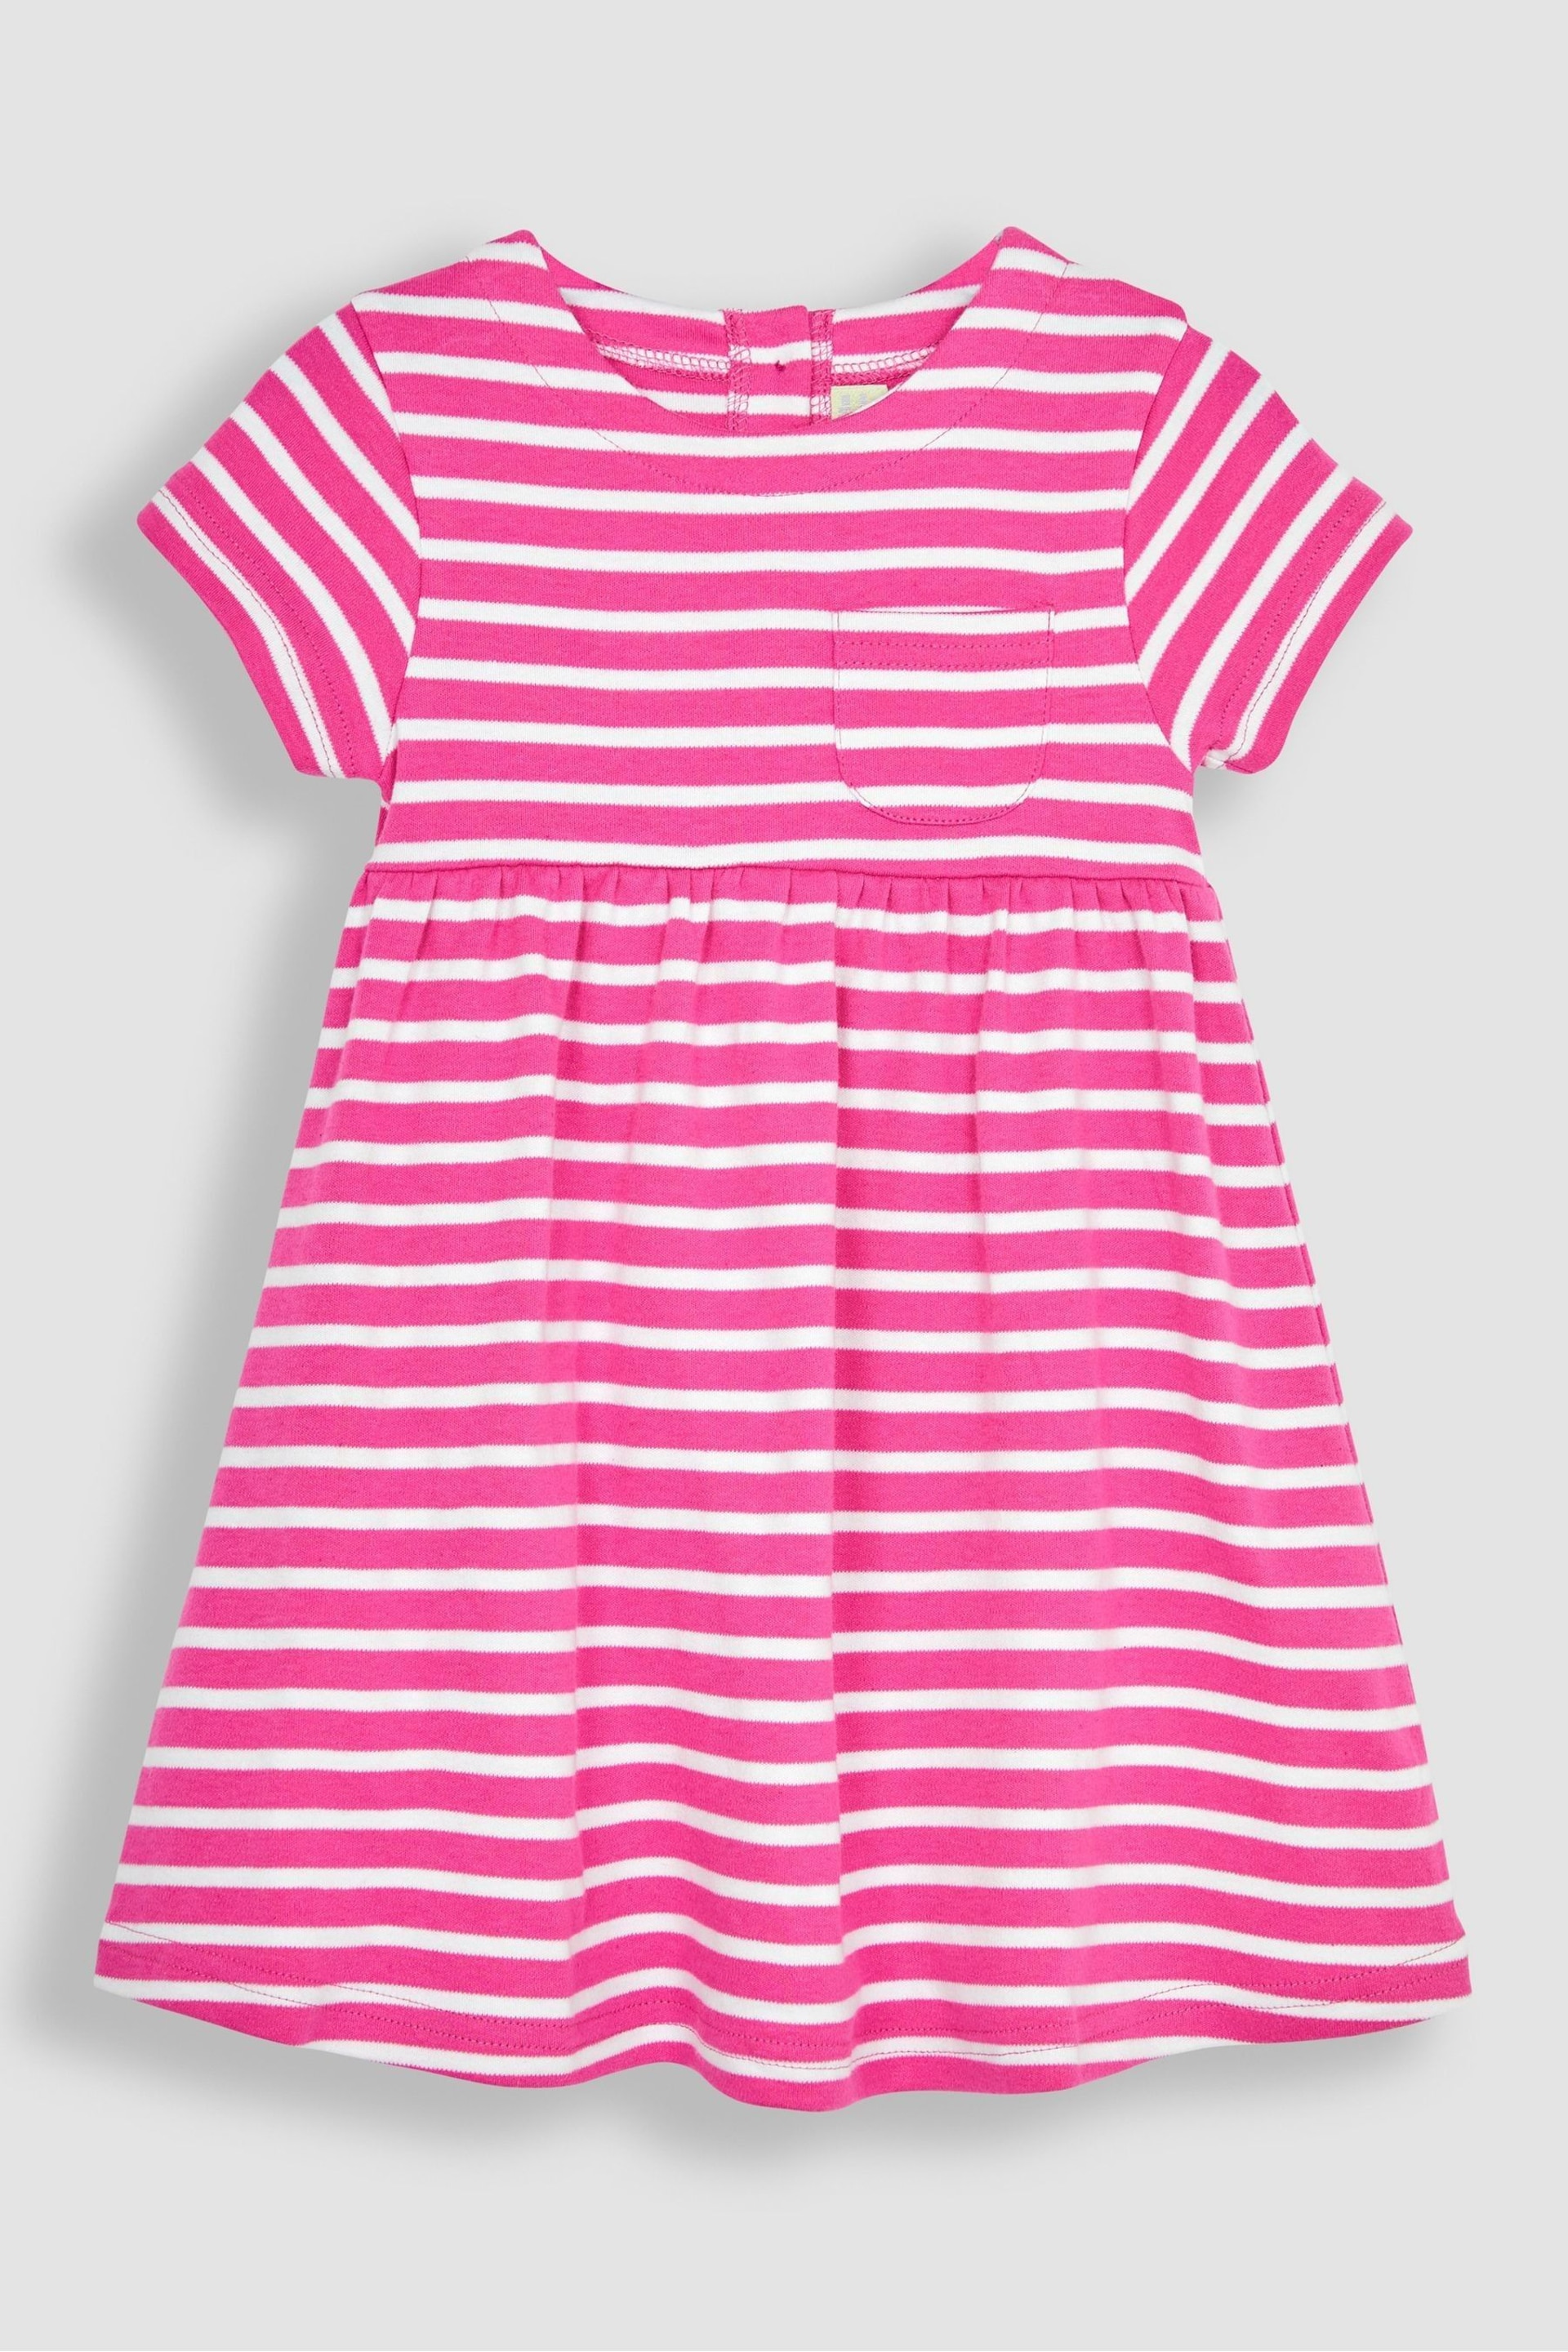 JoJo Maman Bébé Pink Classic Stripe Jersey Dress - Image 1 of 3